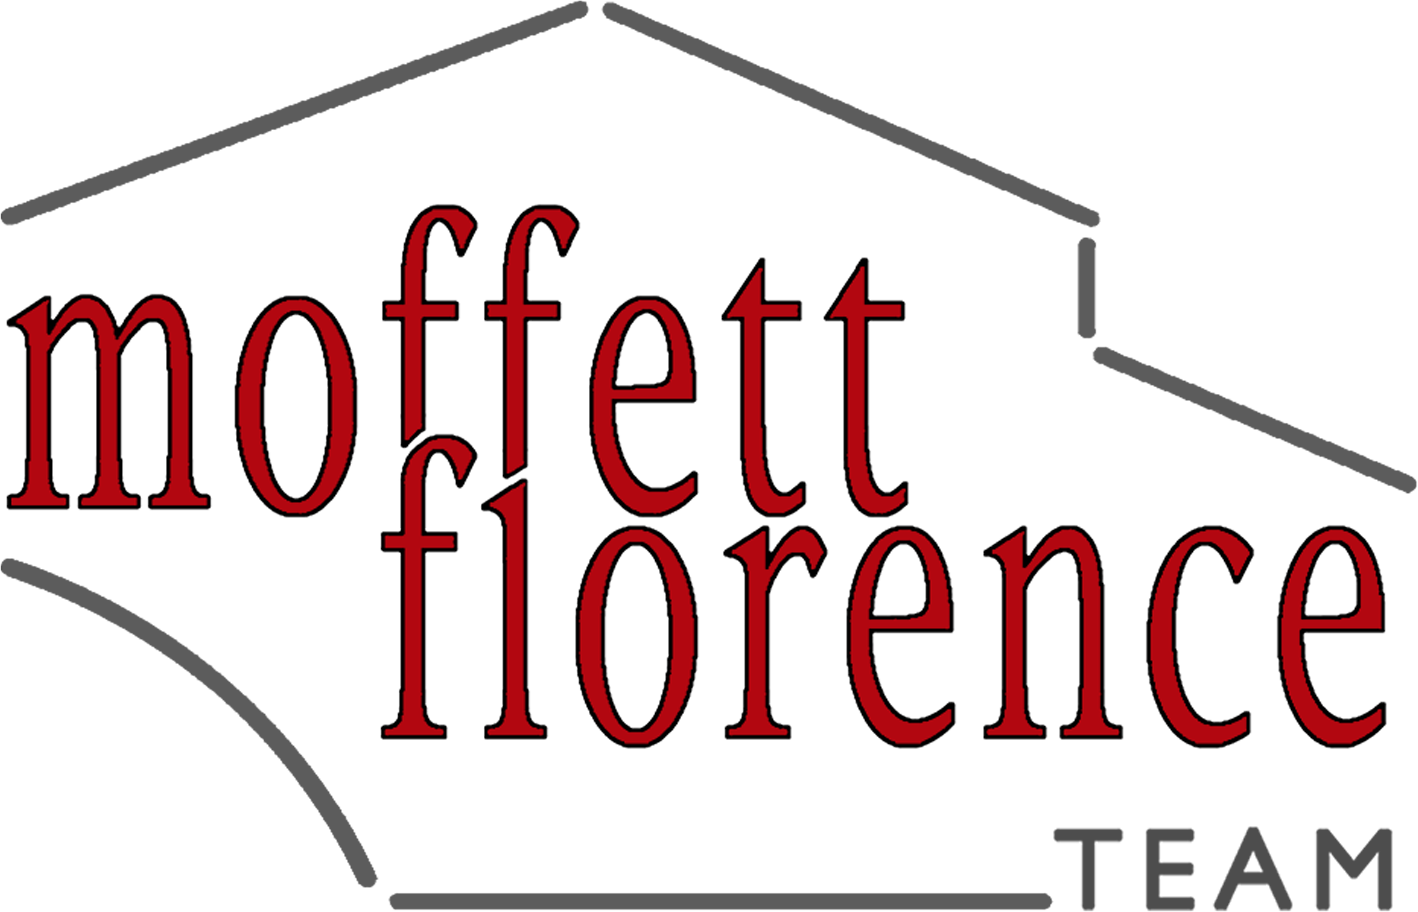 Moffett-Florence Team